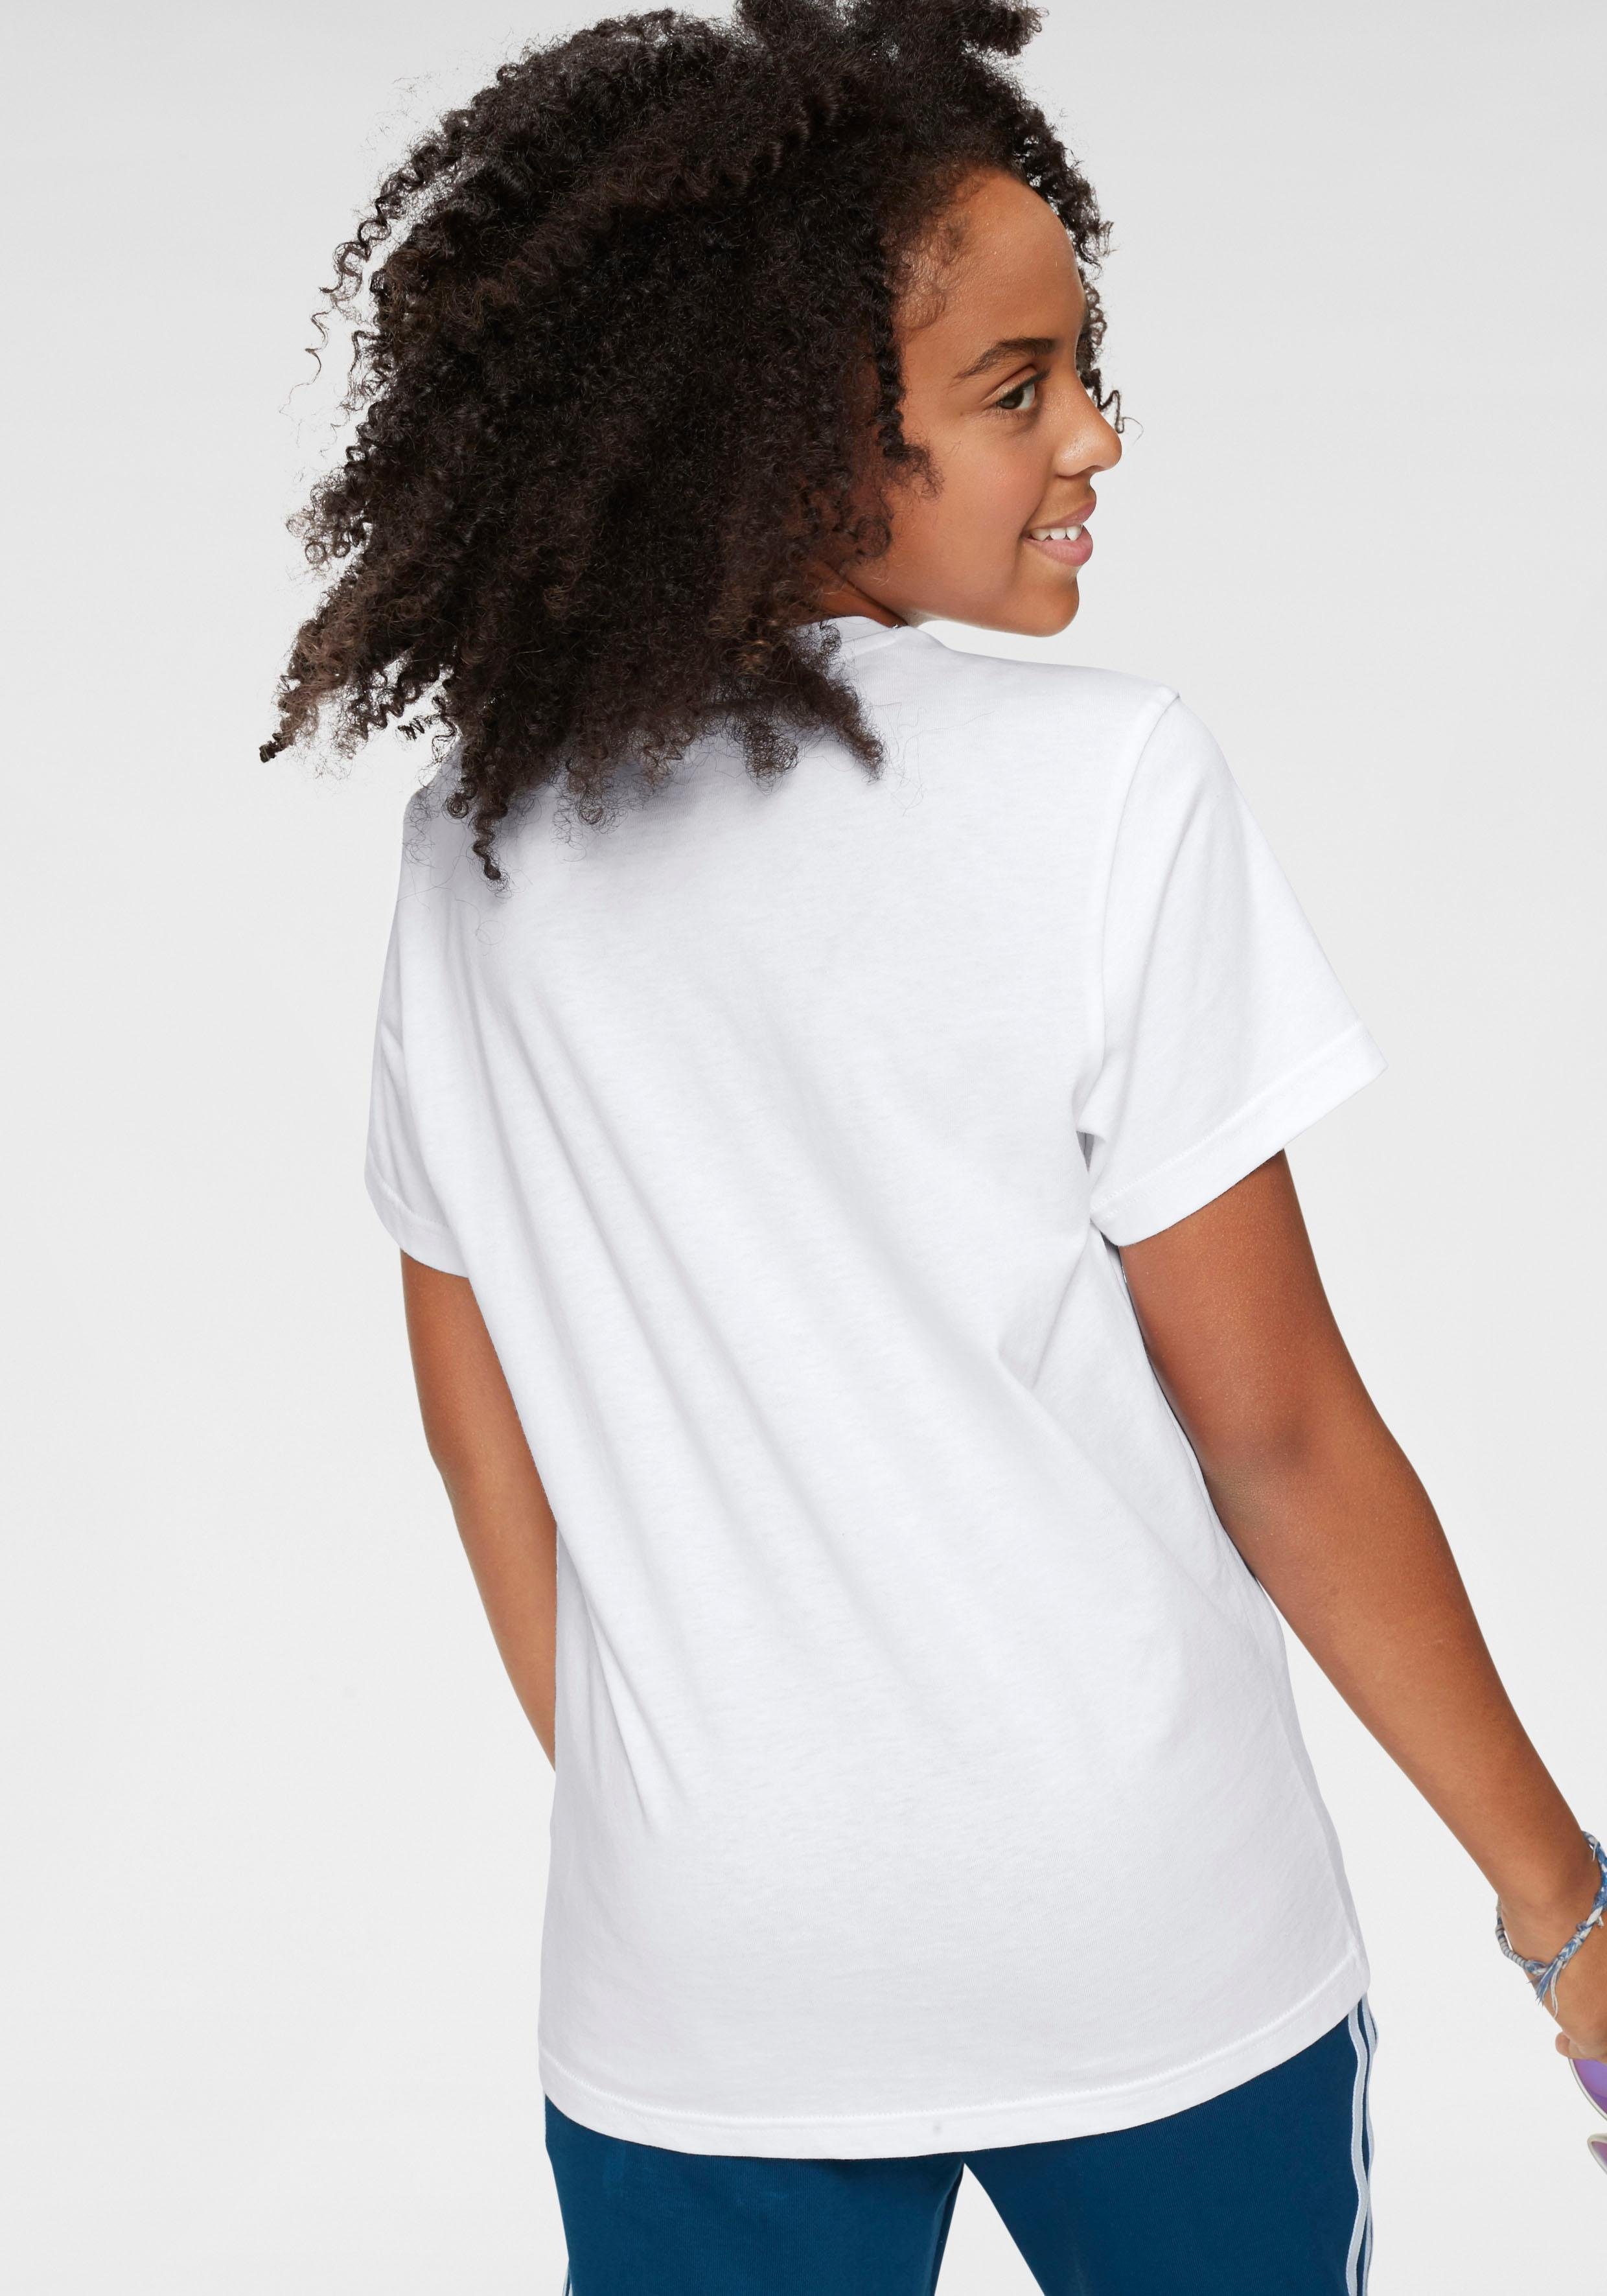 T-Shirt adidas Black TREFOIL White TEE / Unisex Originals